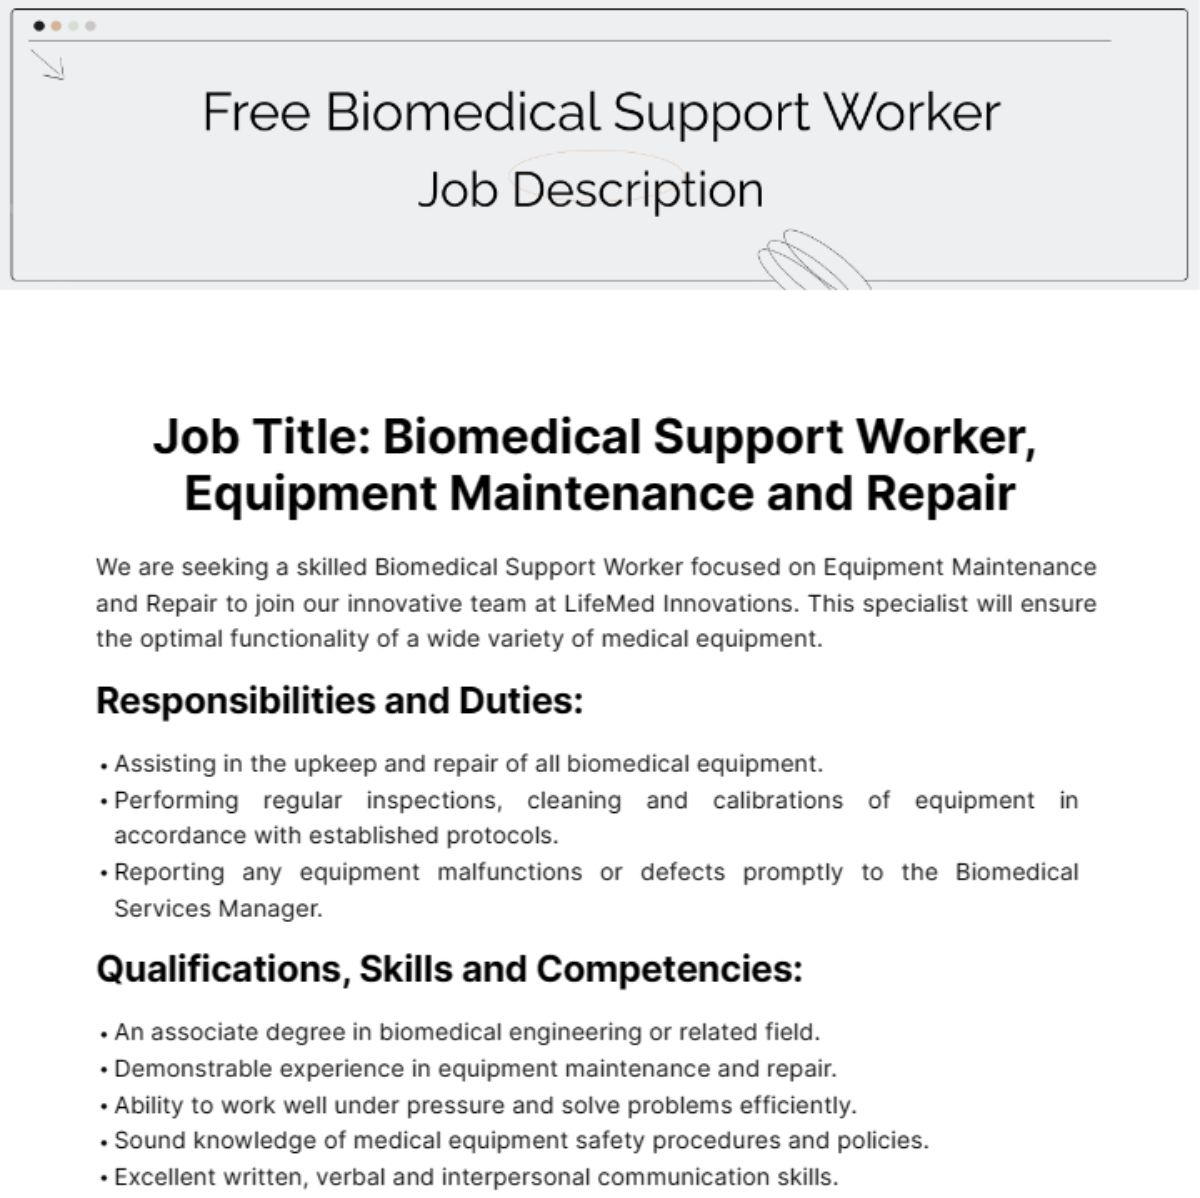 Free Biomedical Support Worker Job description Template